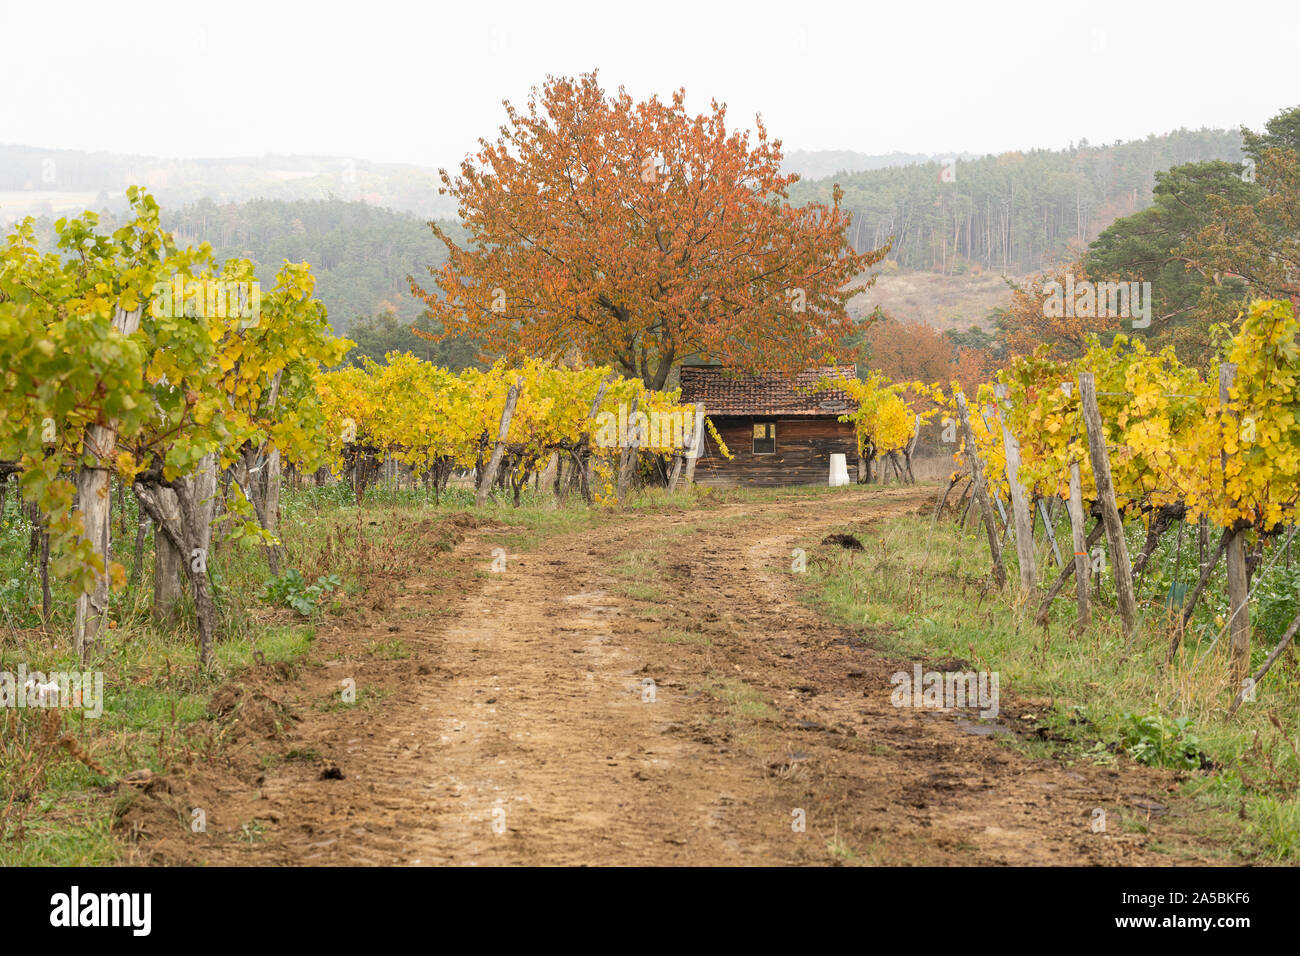 A vintner's hut, wild cherry tree (Prunus Avium) and rows of yellow leaved European grapevines (Vitis vinifera) in Lower Austria Stock Photo